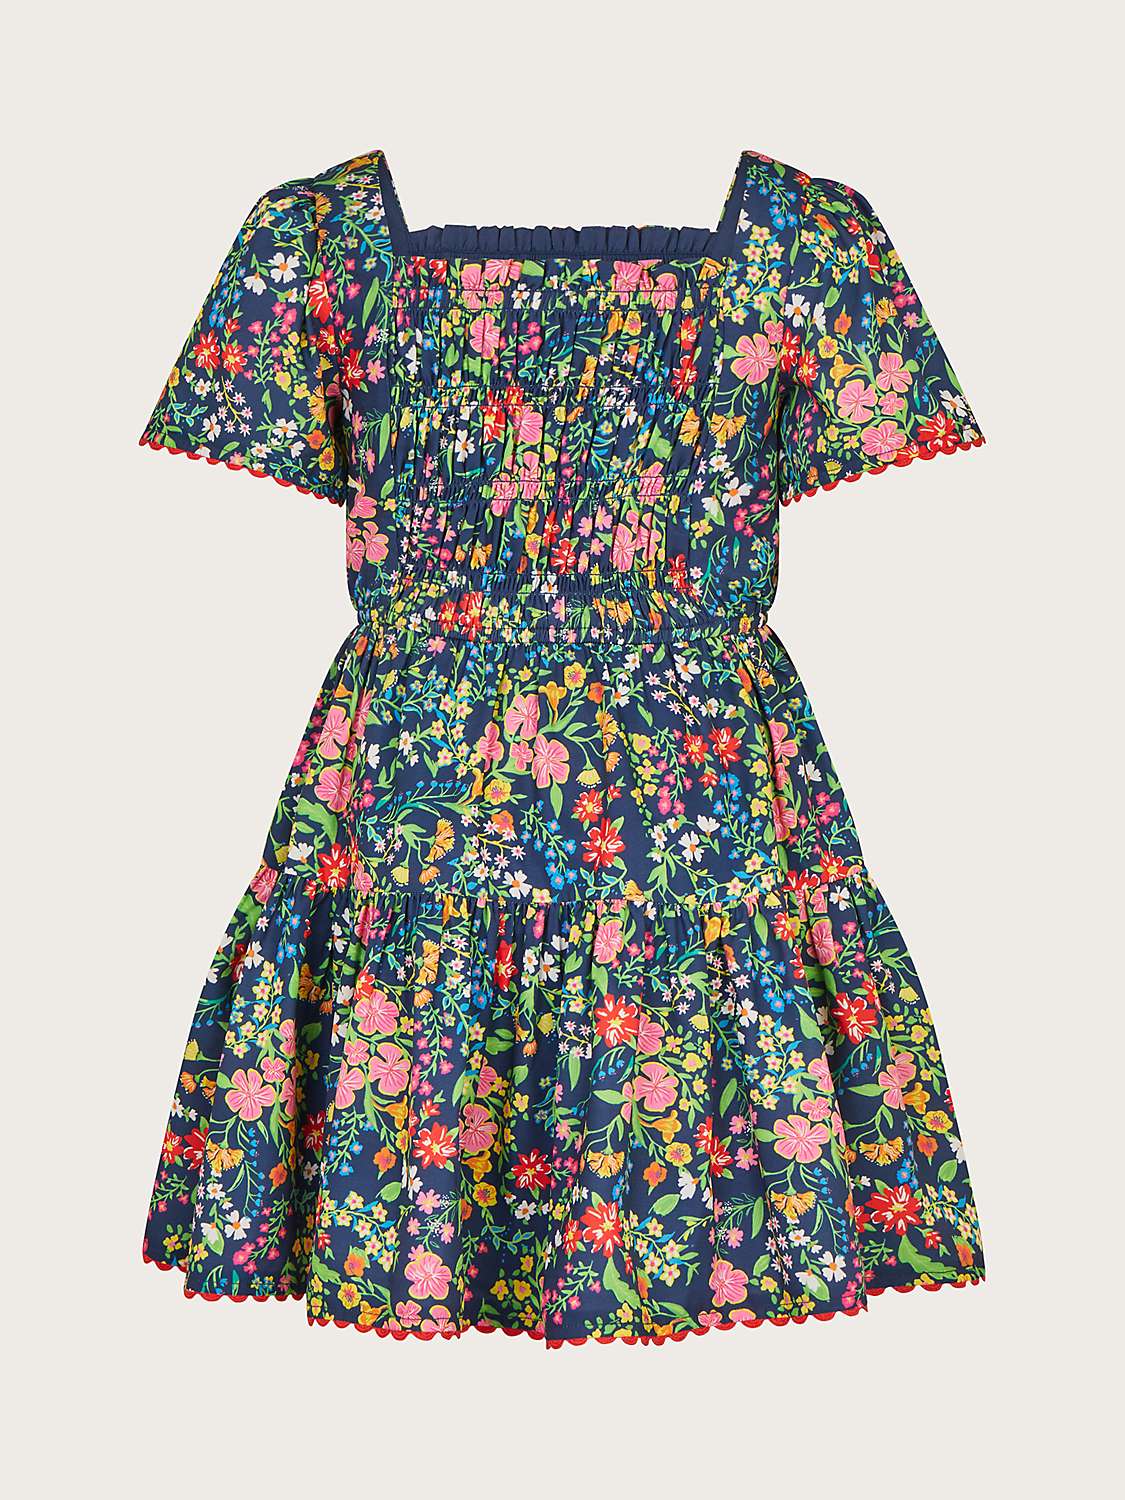 Buy Monsoon Kids' Paisley Floral Print Dress, Navy/Multi Online at johnlewis.com